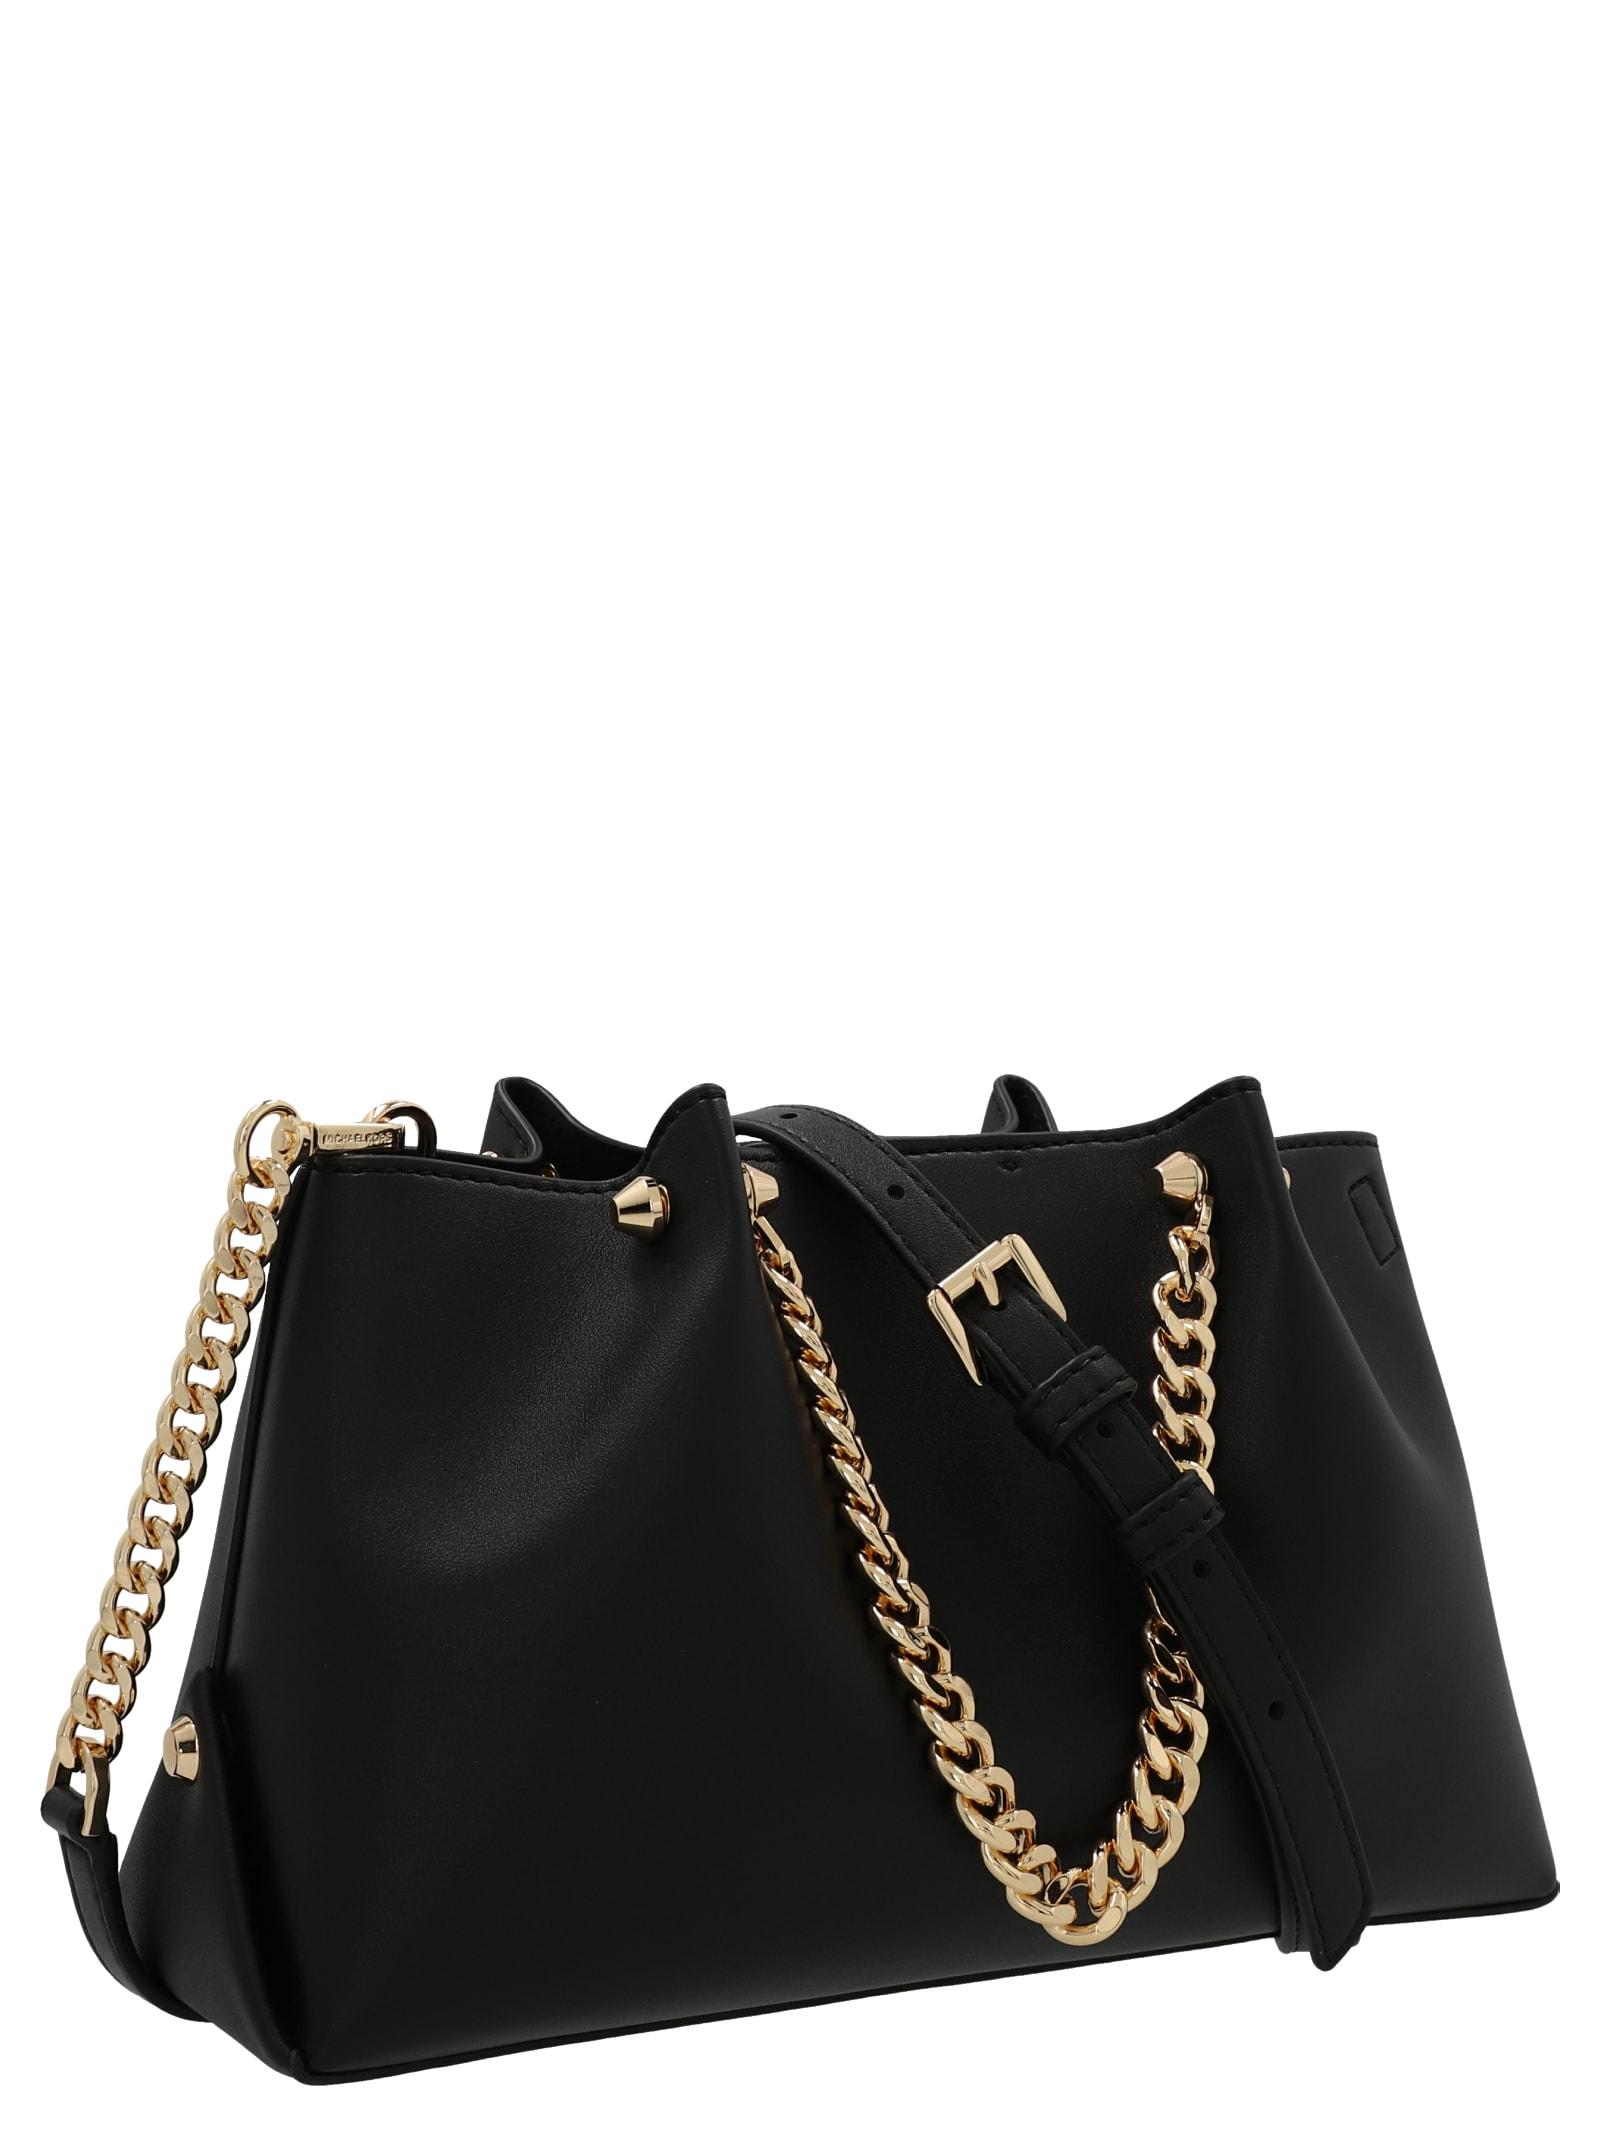 Michael Kors Zena Small Handbag Black | Lyst